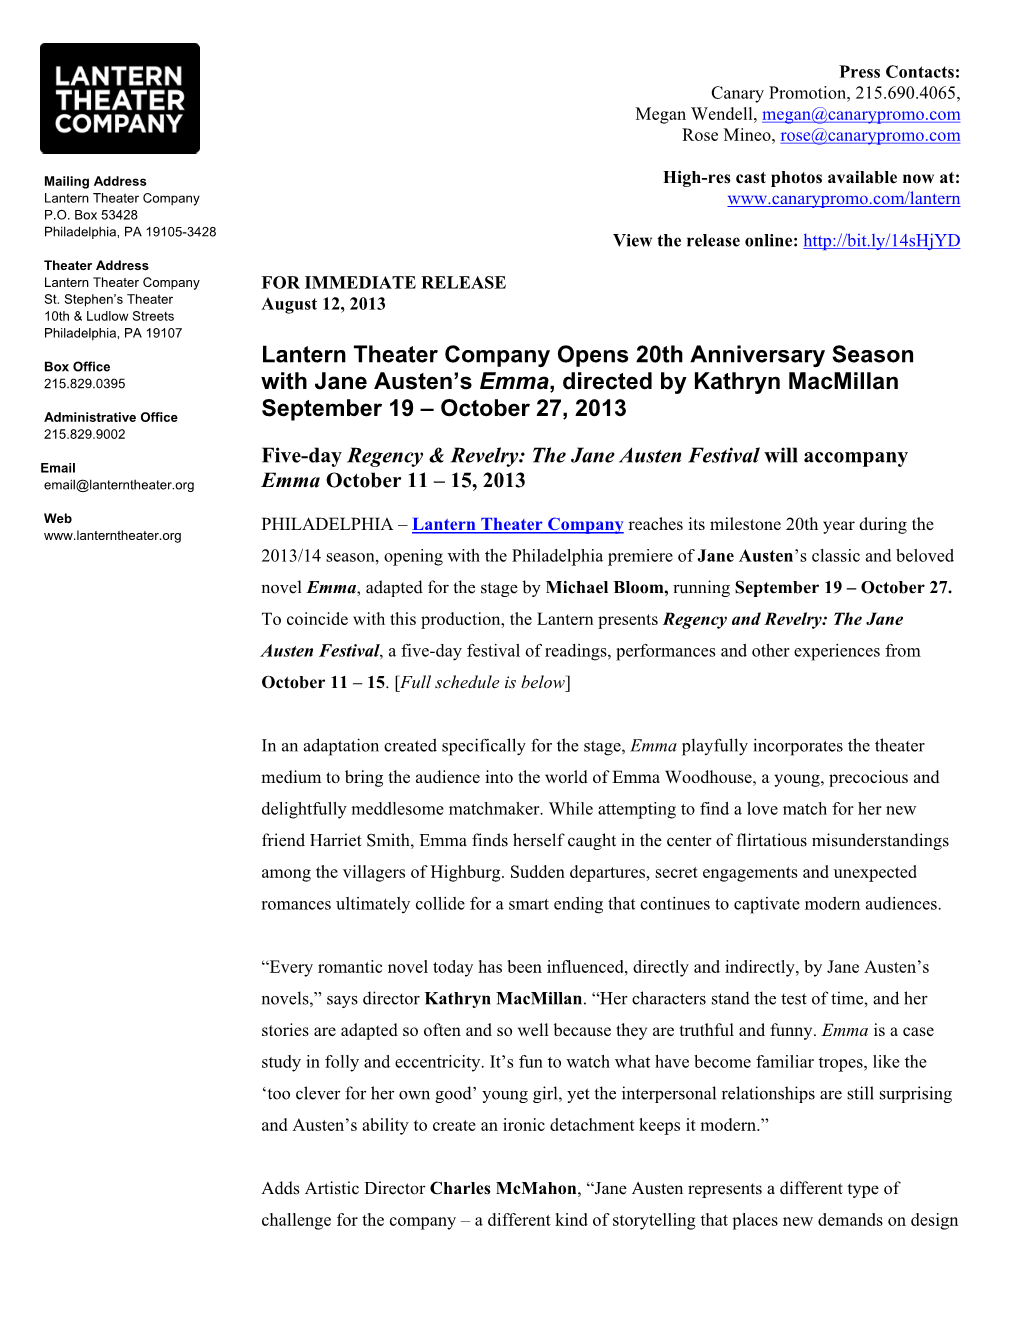 Lantern Theater Company Opens 20Th Anniversary Season with Jane